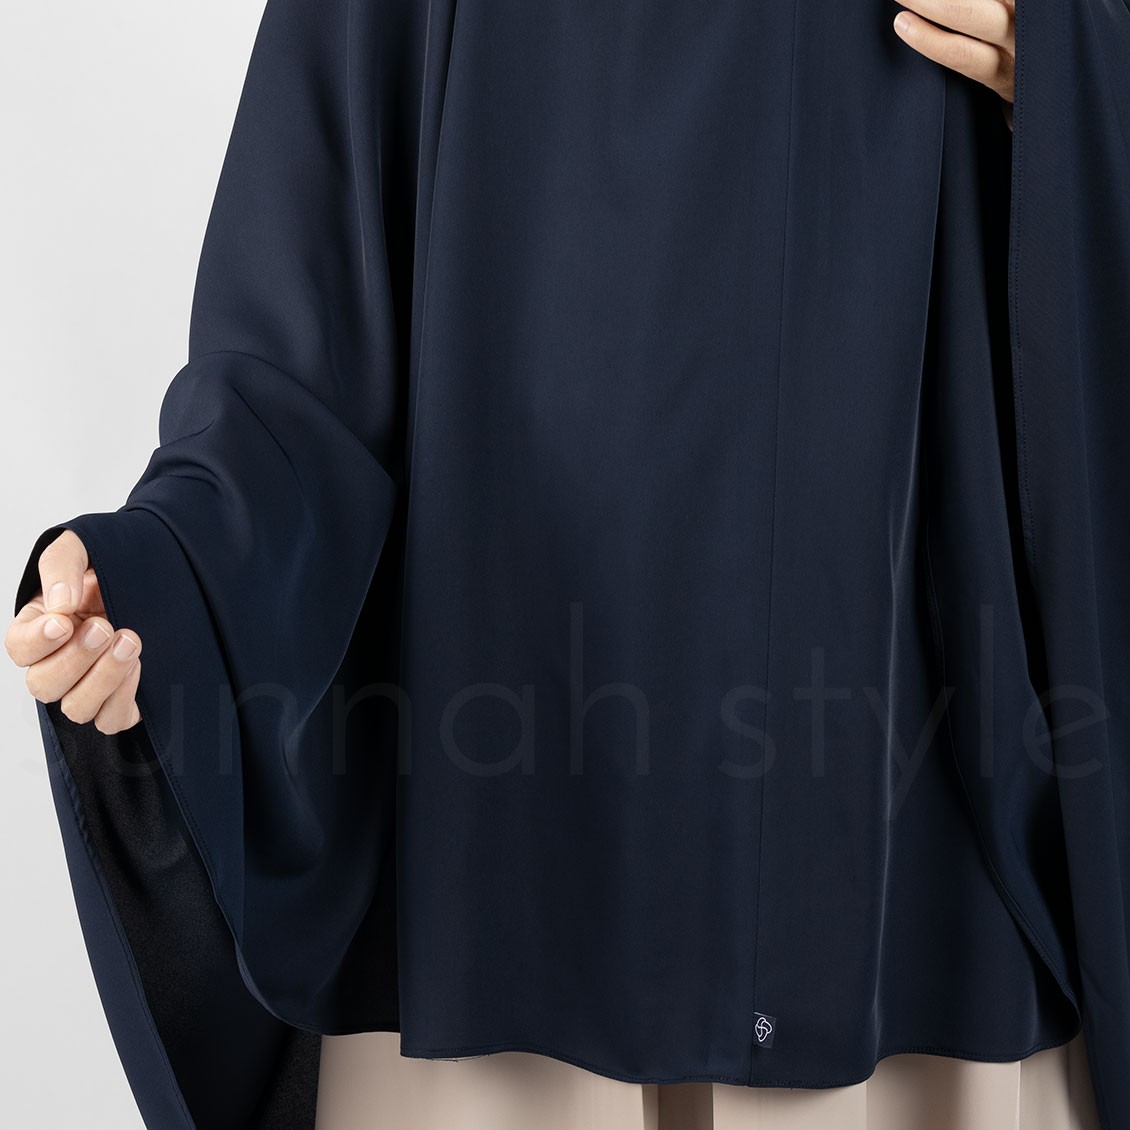 Sunnah Style Essentials Khimar Full Length Navy Blue